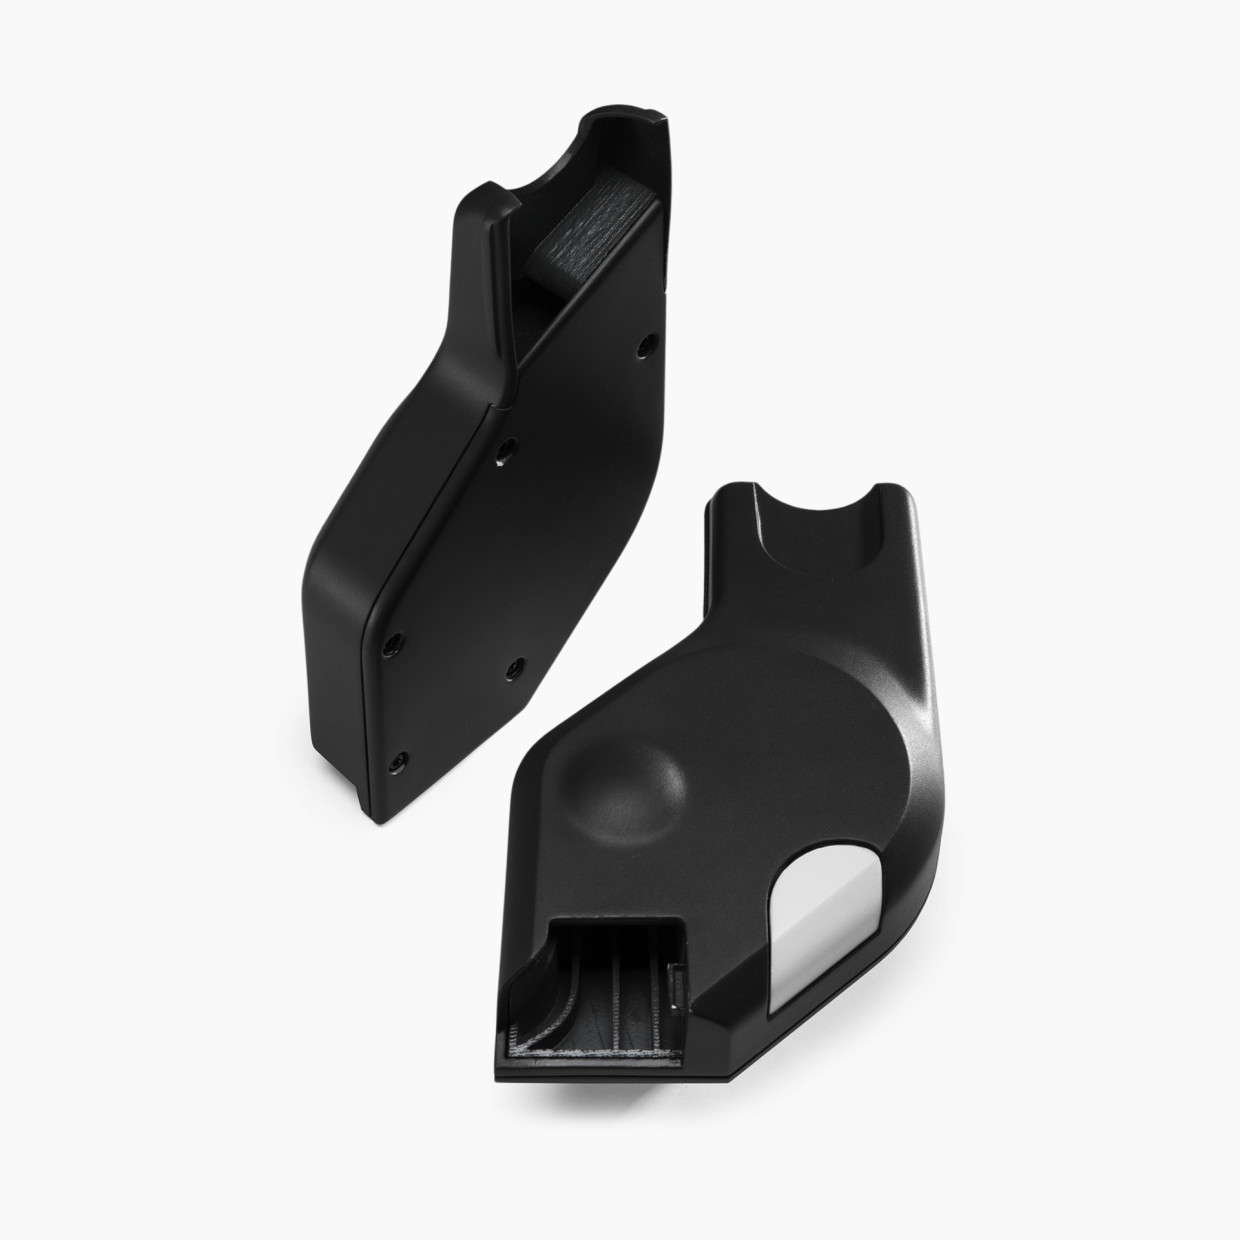 Stokke Stroller Car Seat Adapter (Multi) - Black.